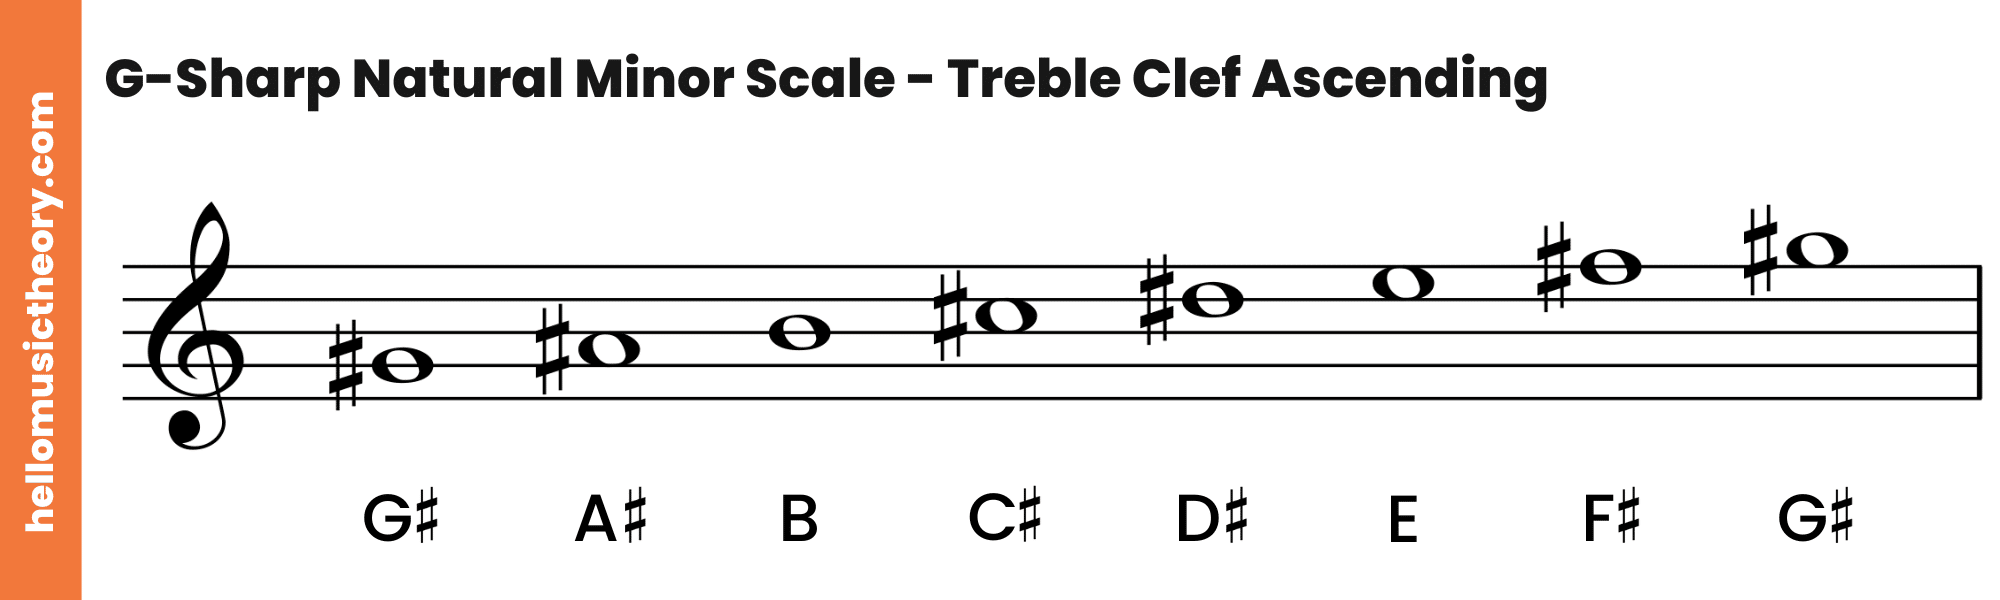 G-Sharp-Natural-Minor-Scale-Treble-Clef-Ascending